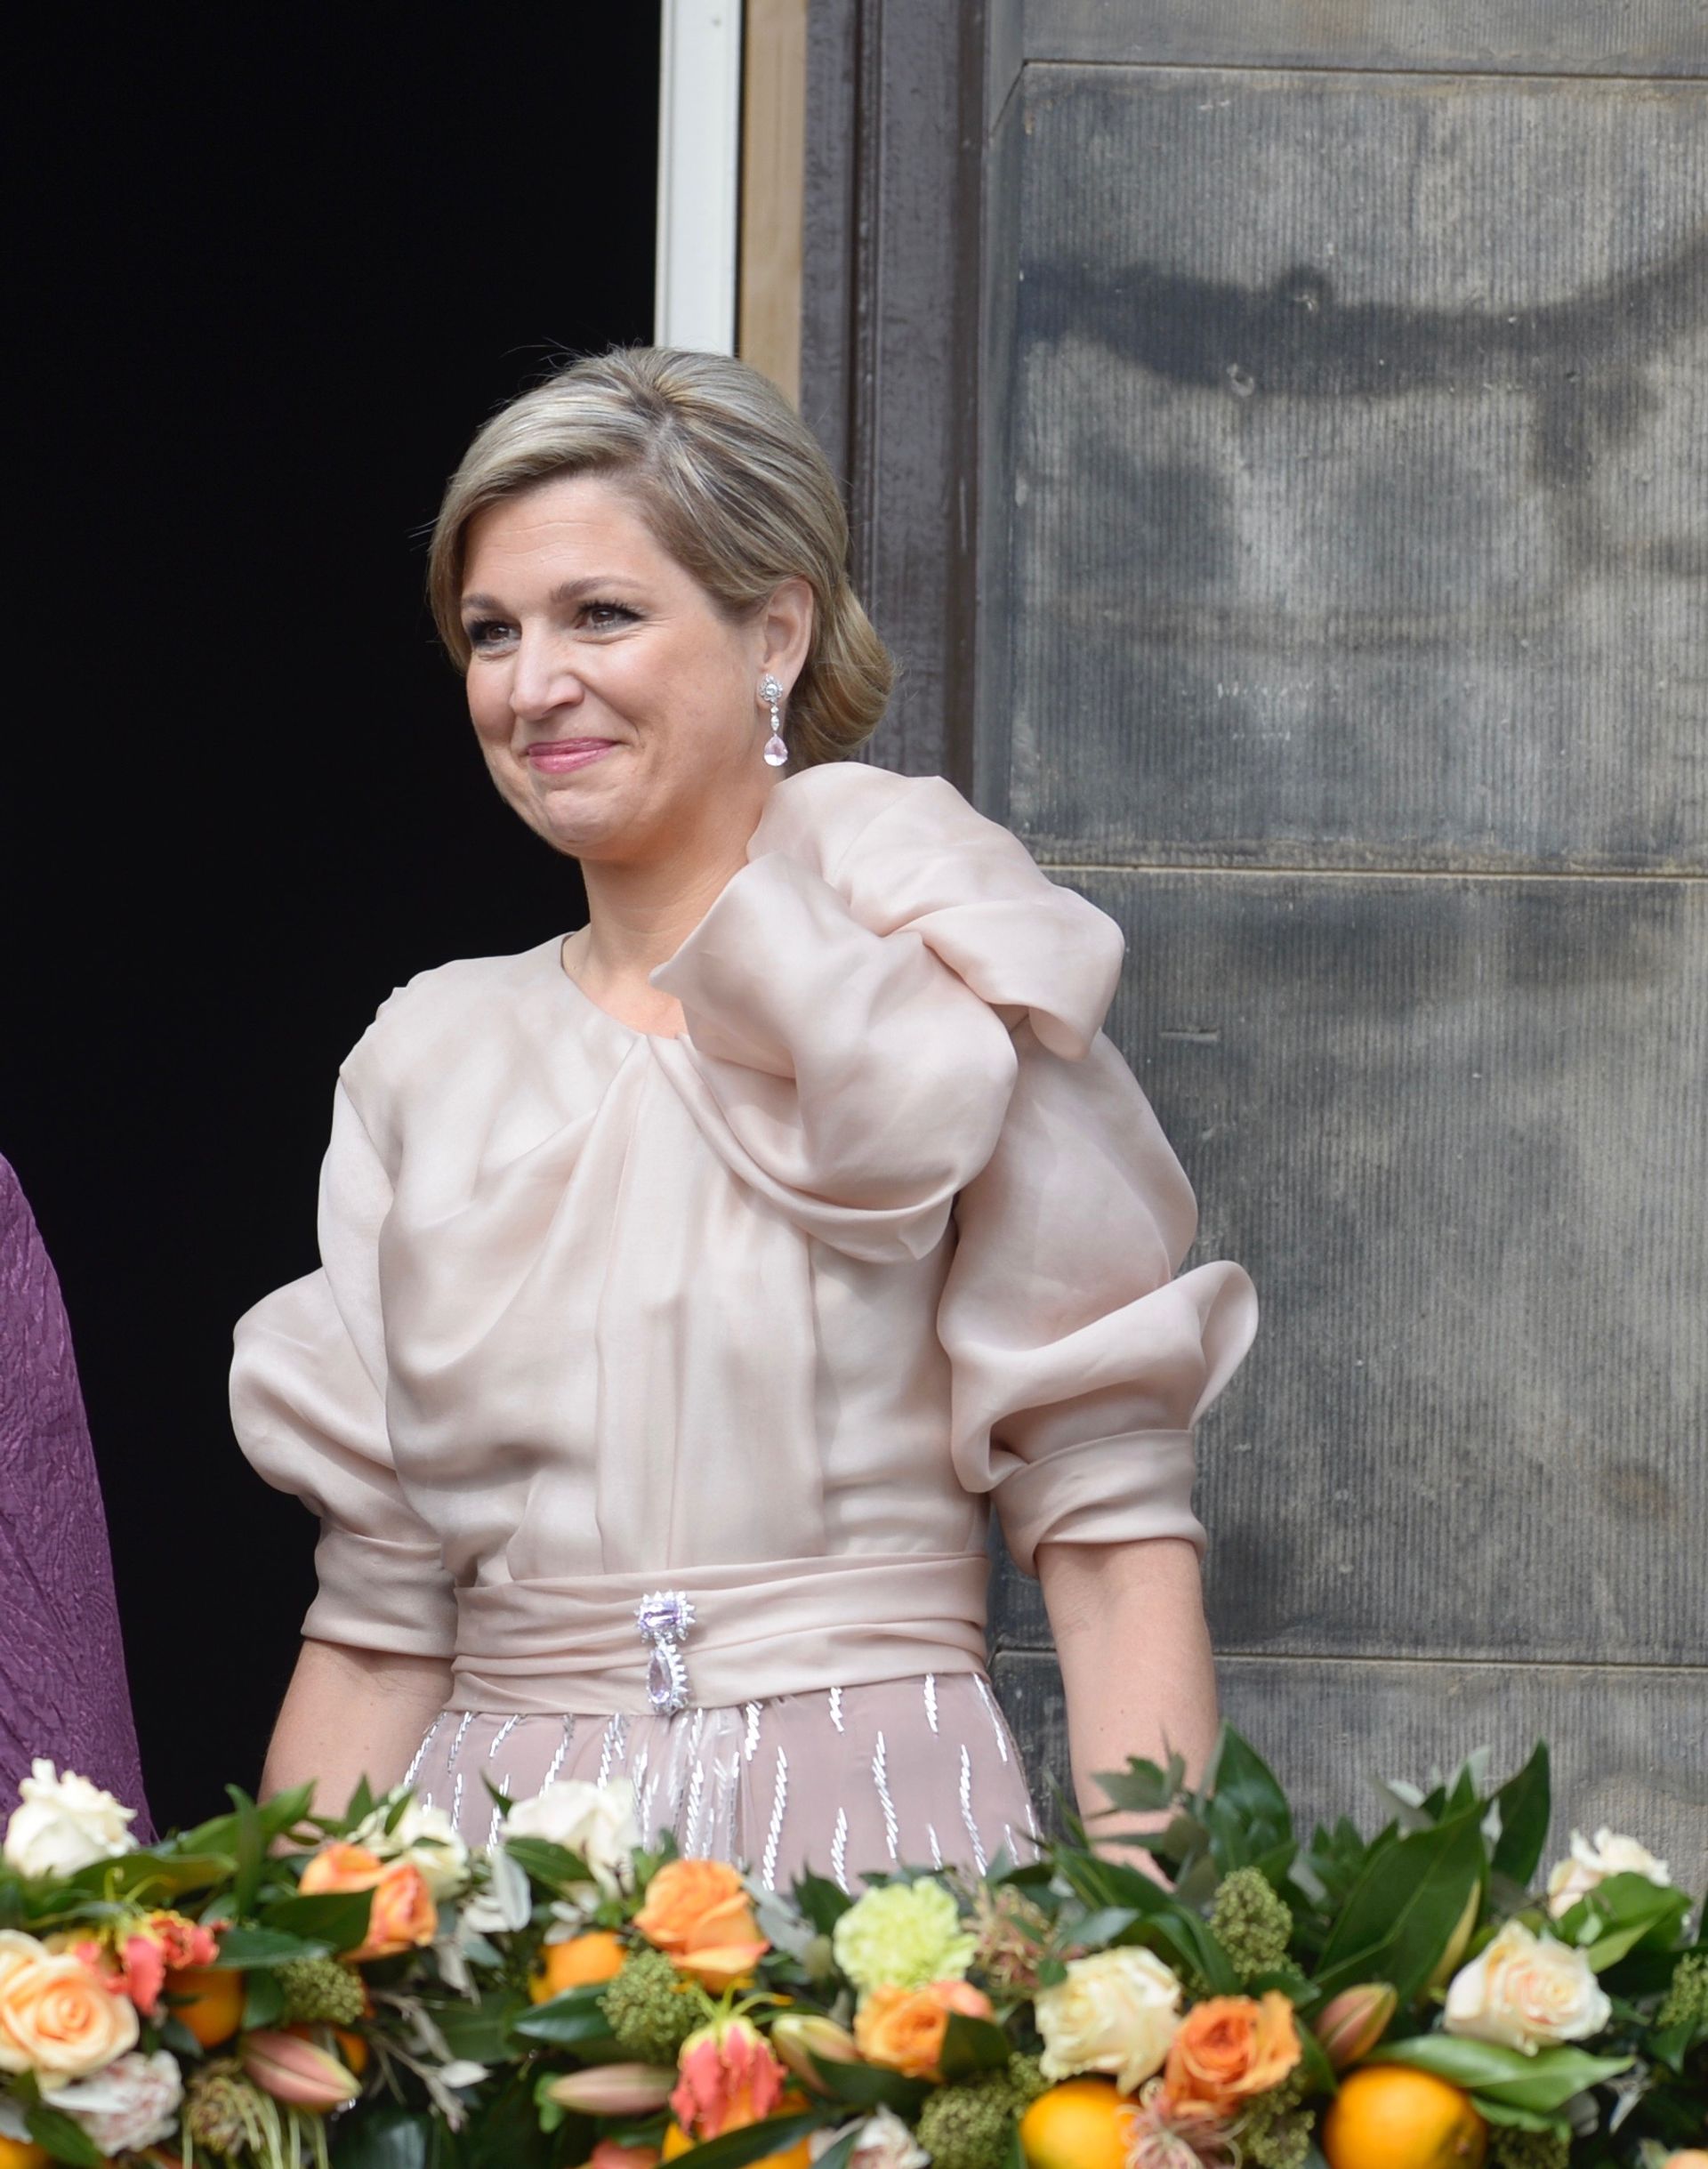 Koningin Máxima draagt de broche na de abdicatie van prinses Beatrix - 2013